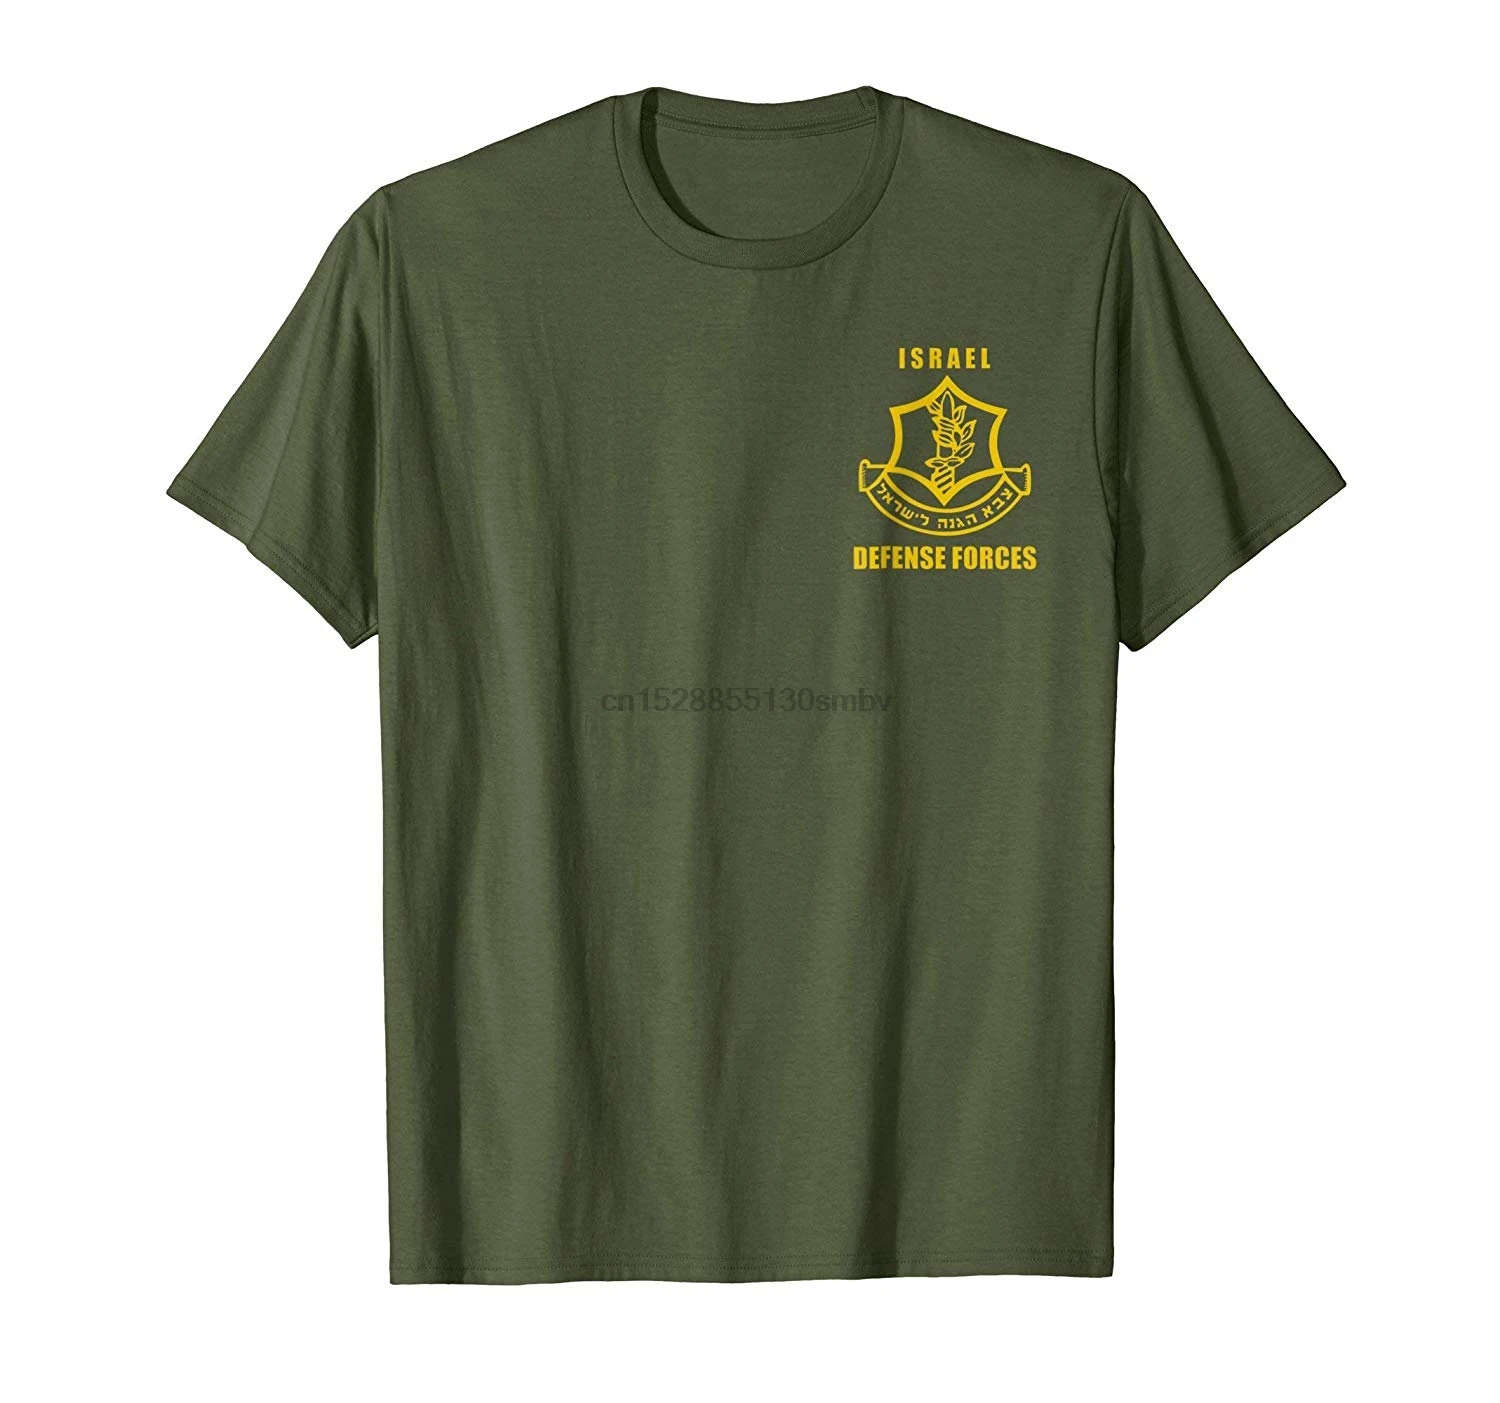 

2019 крутая футболка армии Израиля. Футболка унисекс с маленьким логотипом Армии обороны Израиля